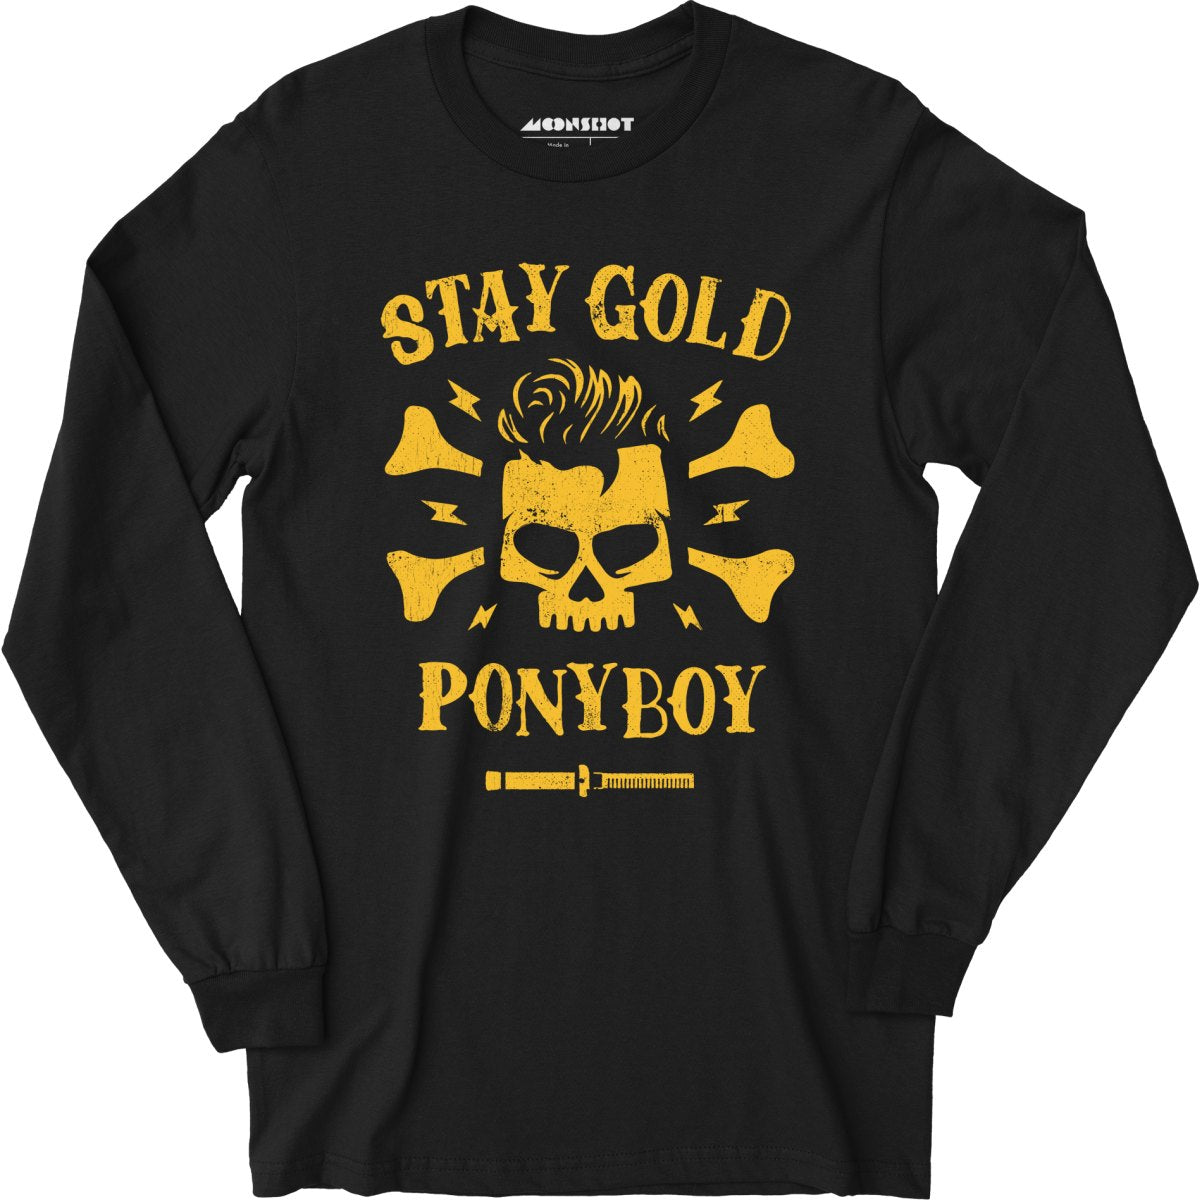 Stay Gold Ponyboy - Long Sleeve T-Shirt